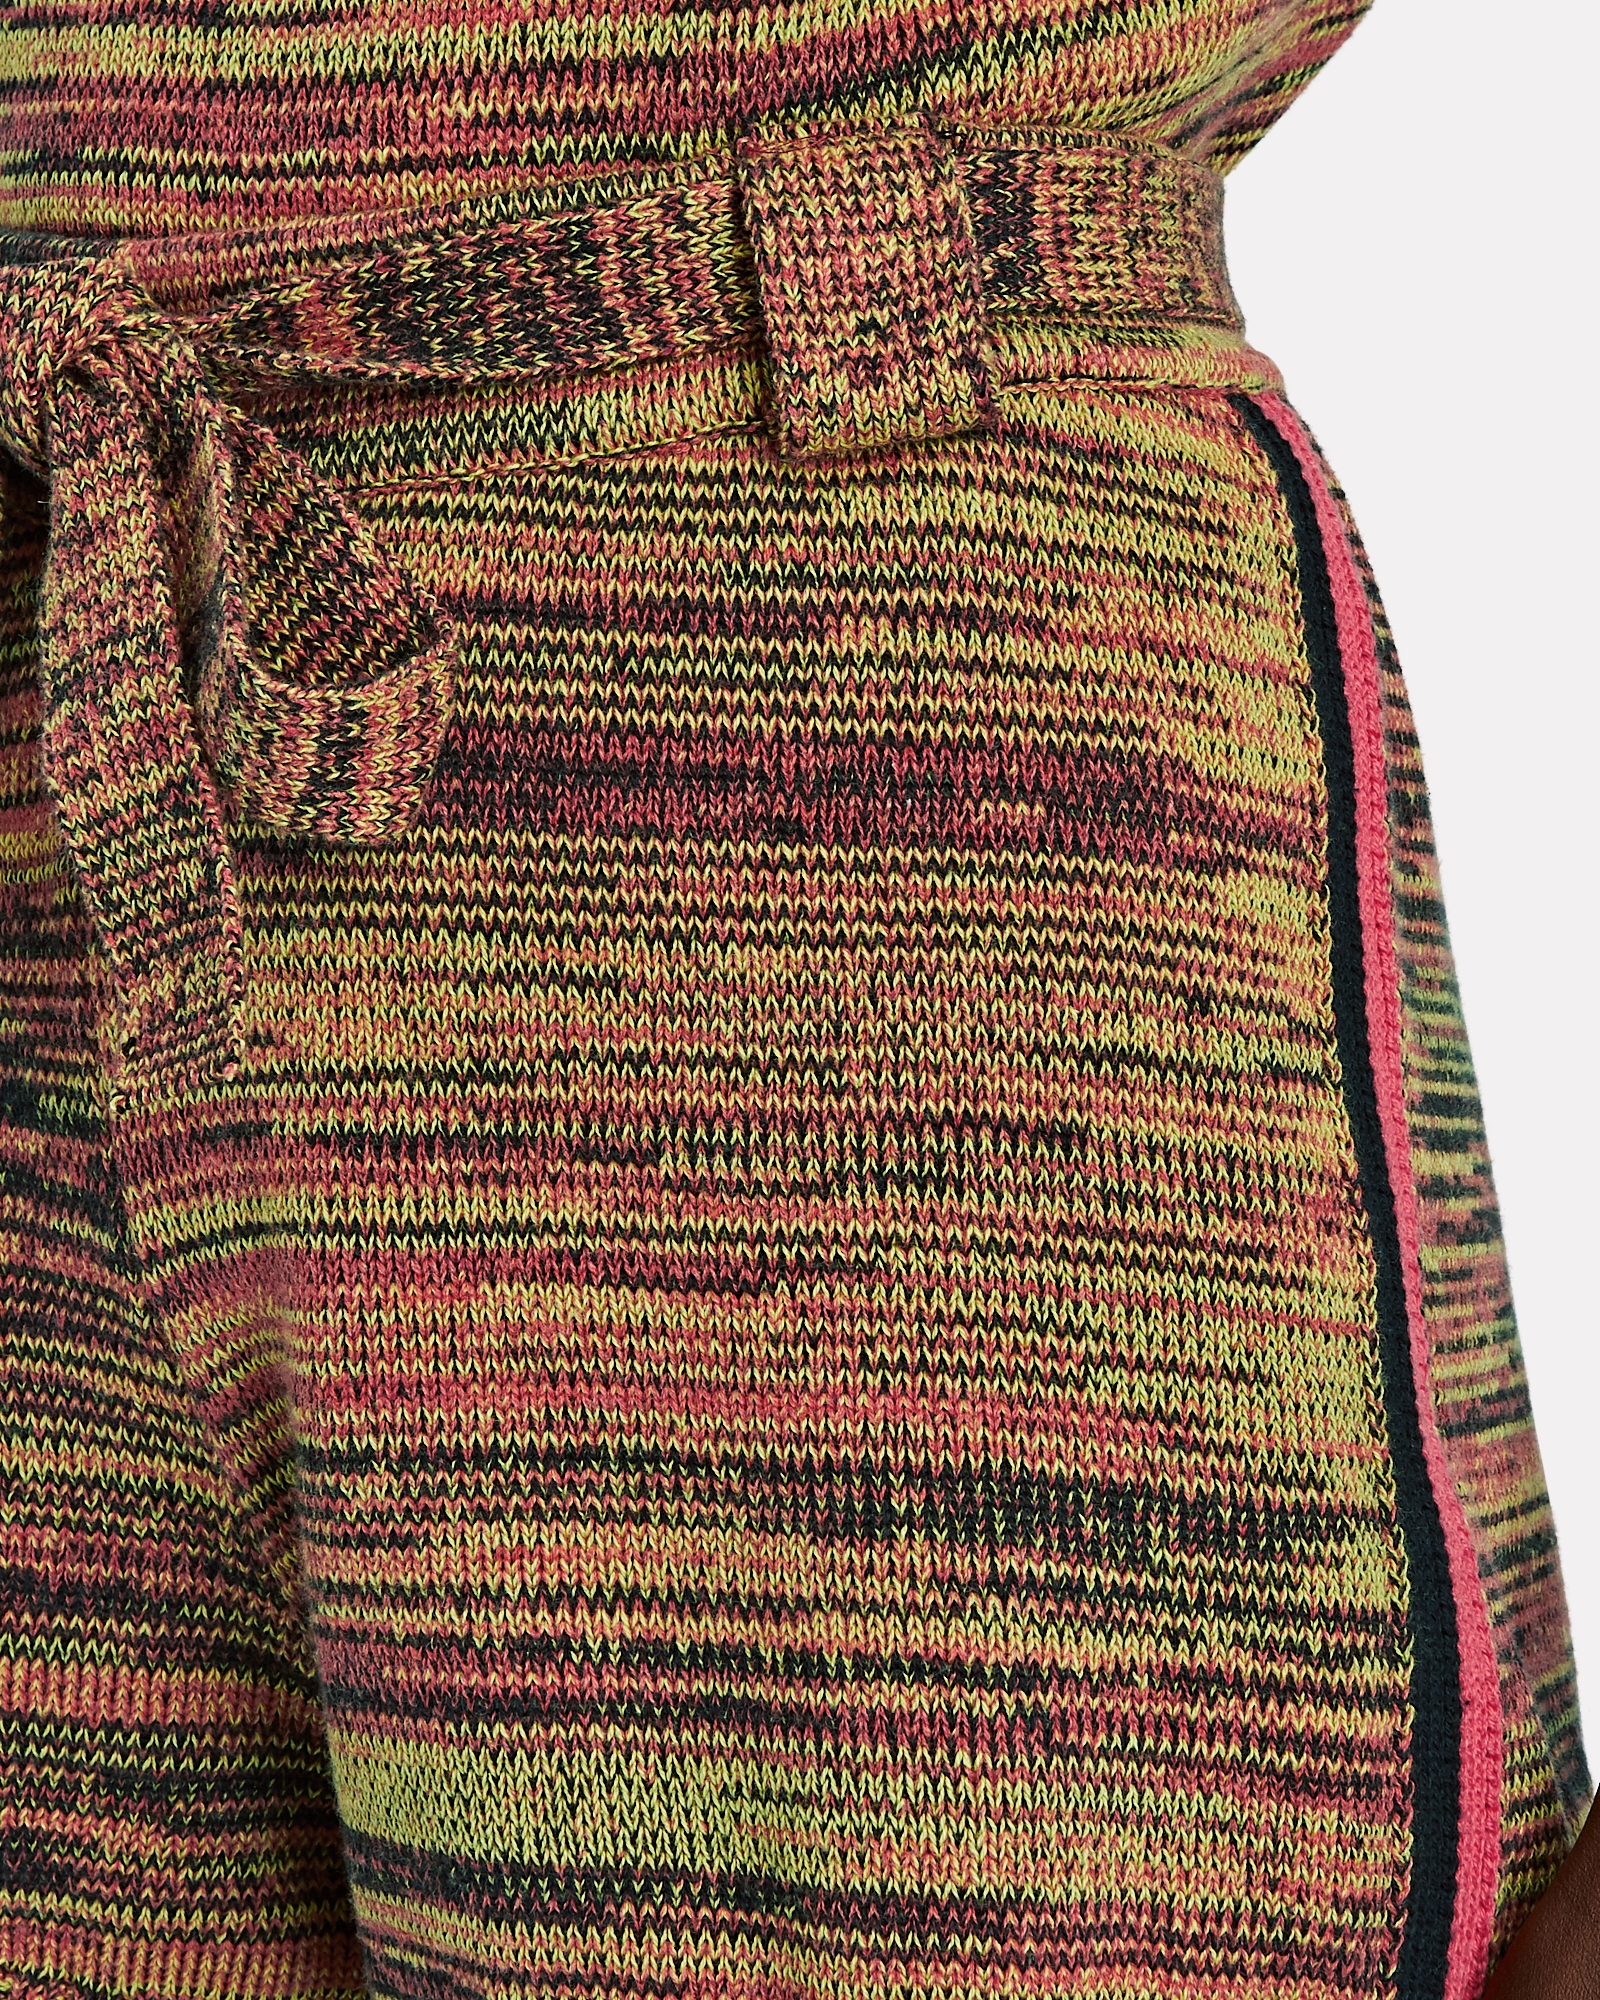 THE UPSIDE Nitara Space-Dyed Knit Shorts | INTERMIX®